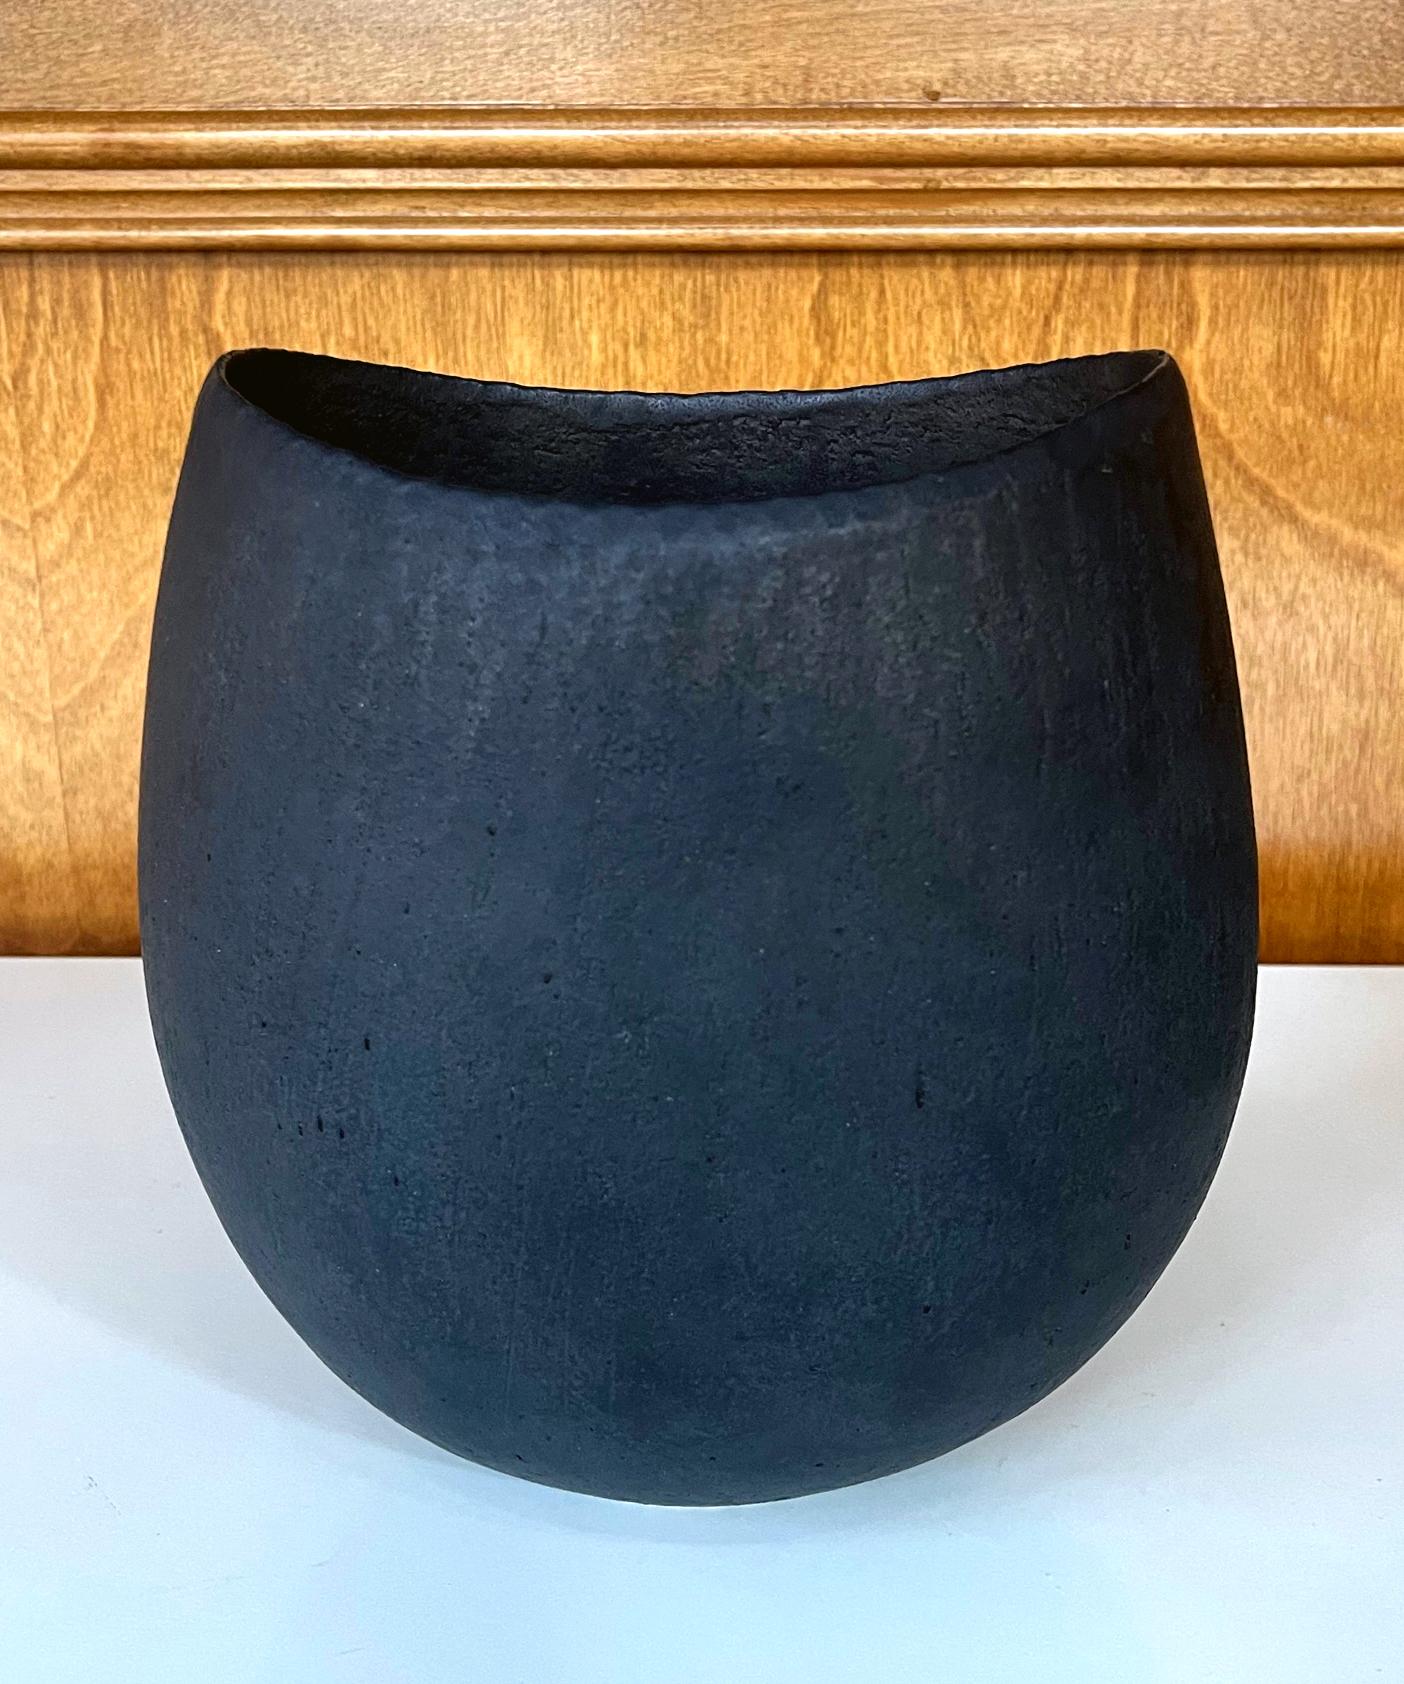 Glazed Ceramic Oval Vessel by British Studio Potter John Ward For Sale